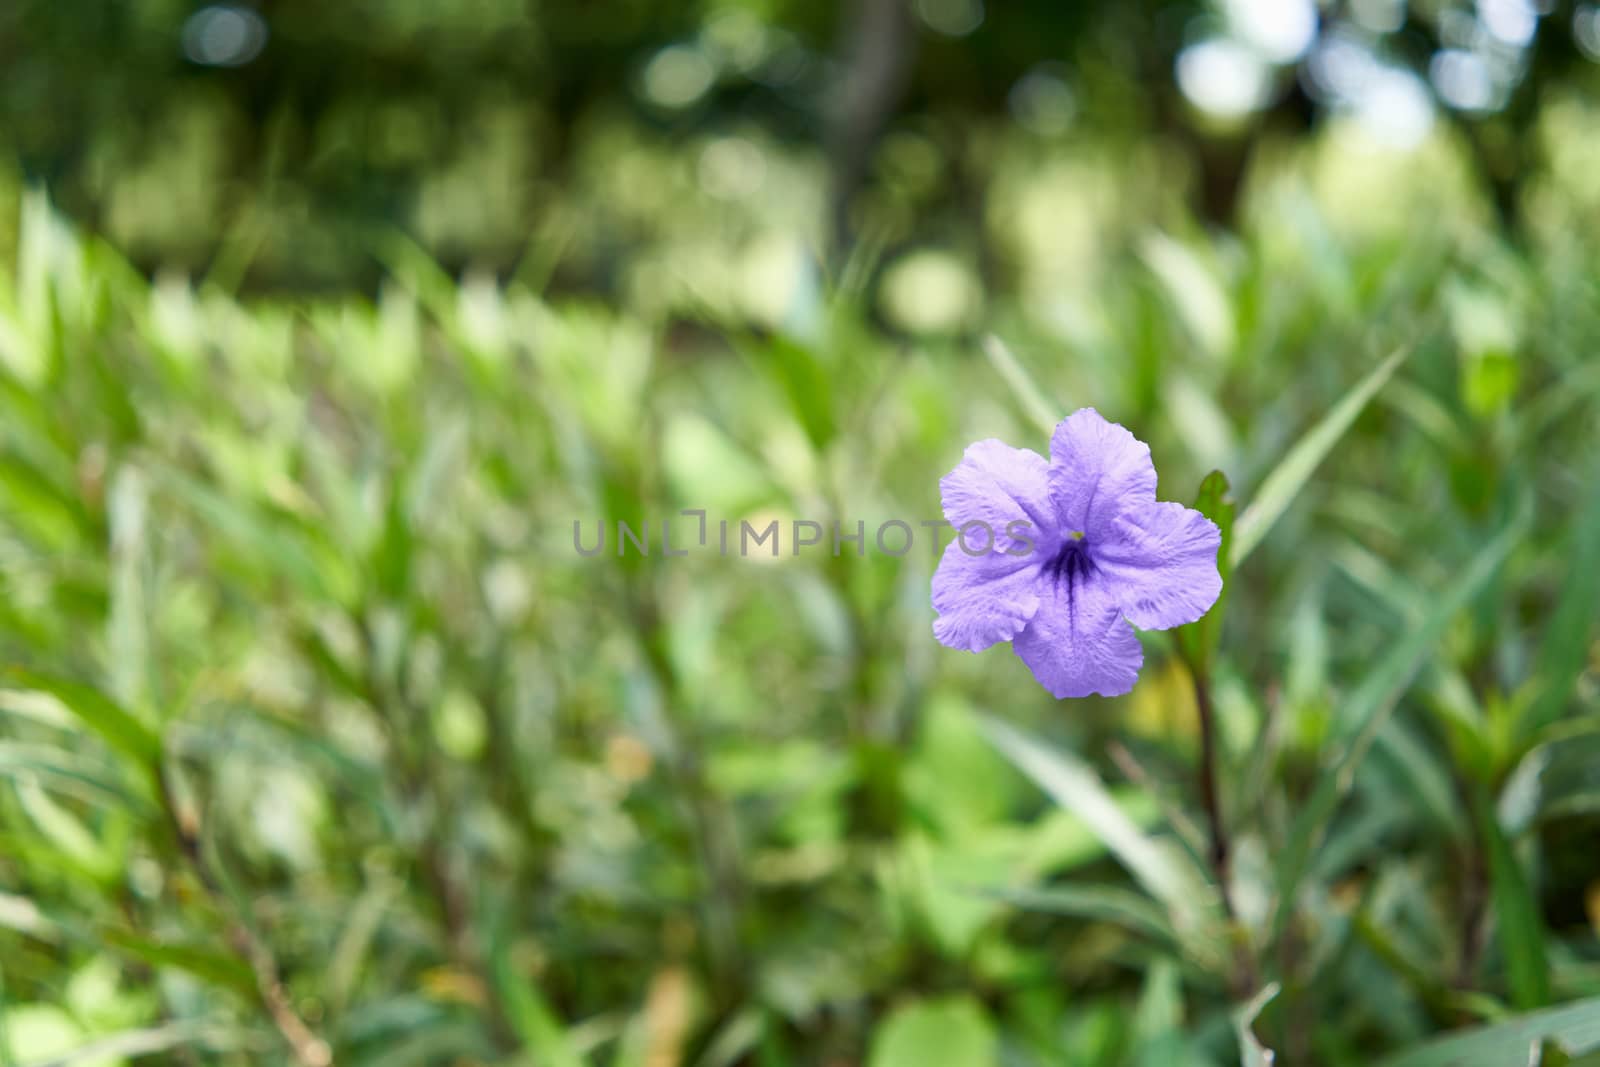 Ruellia tuberosa or Toi ting flower have violet color by eaglesky